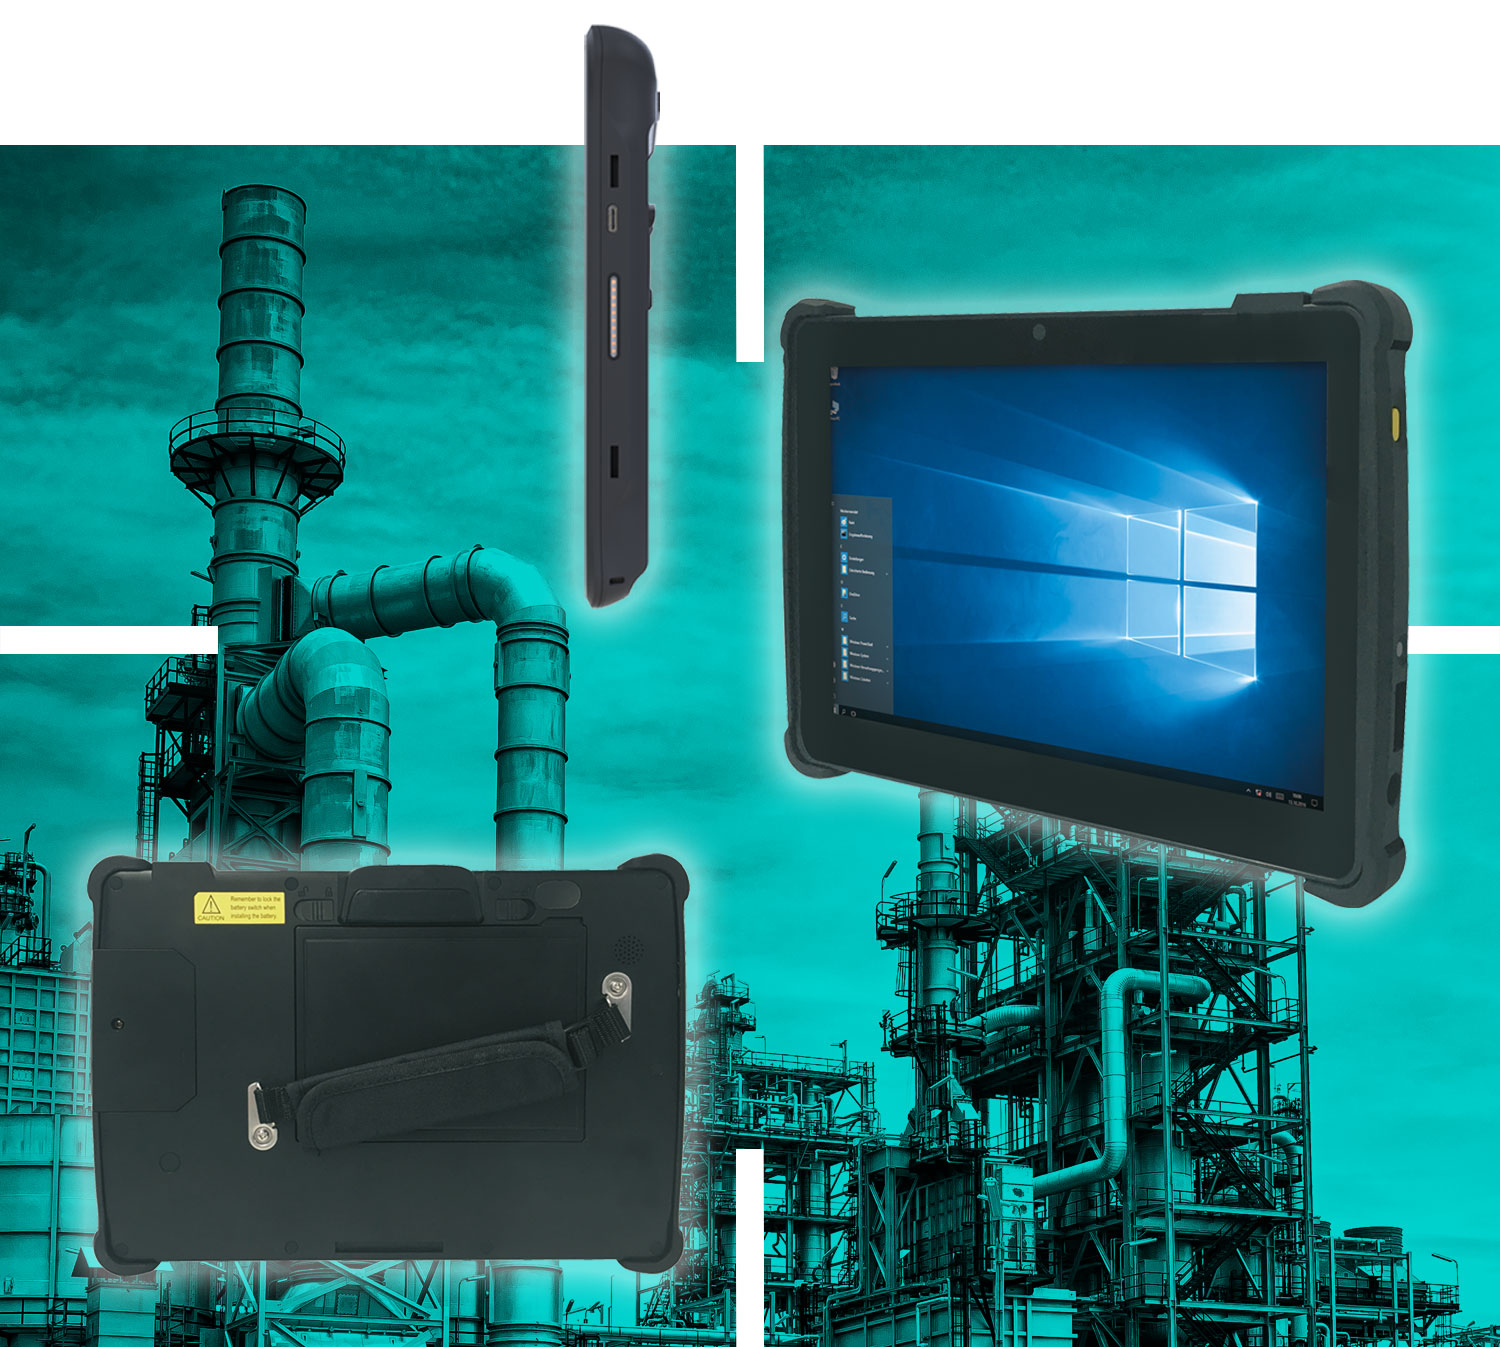 Robuste Tablet- und Handheld-PCs für raue Umgebung